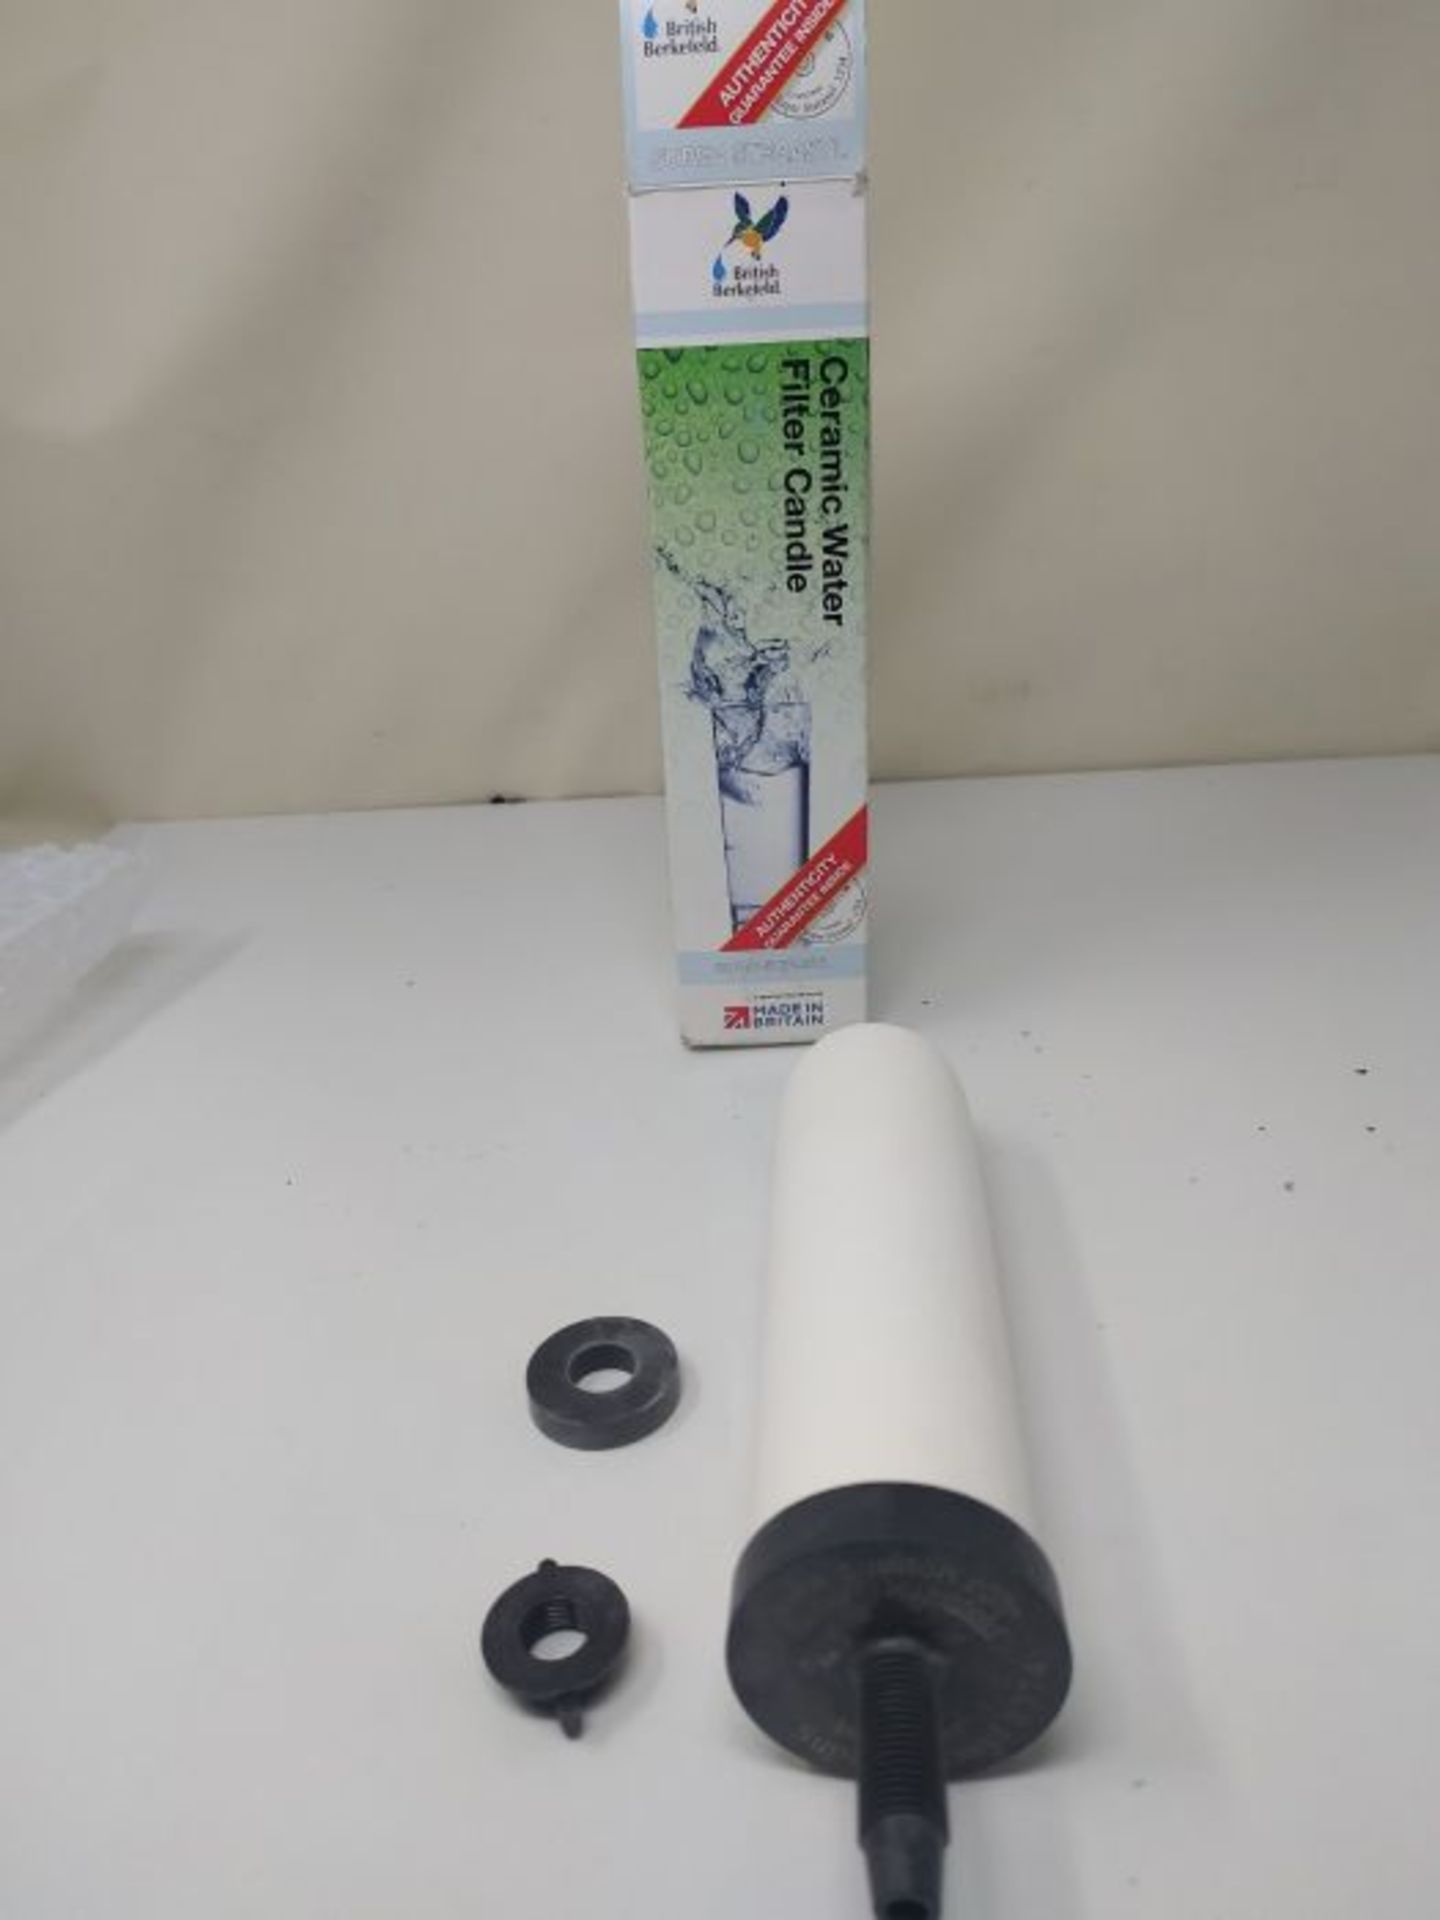 British Berkefeld W9121215 ATC Super Sterasyl Ceramic Drinking Water Filter Cartridge - Image 2 of 2